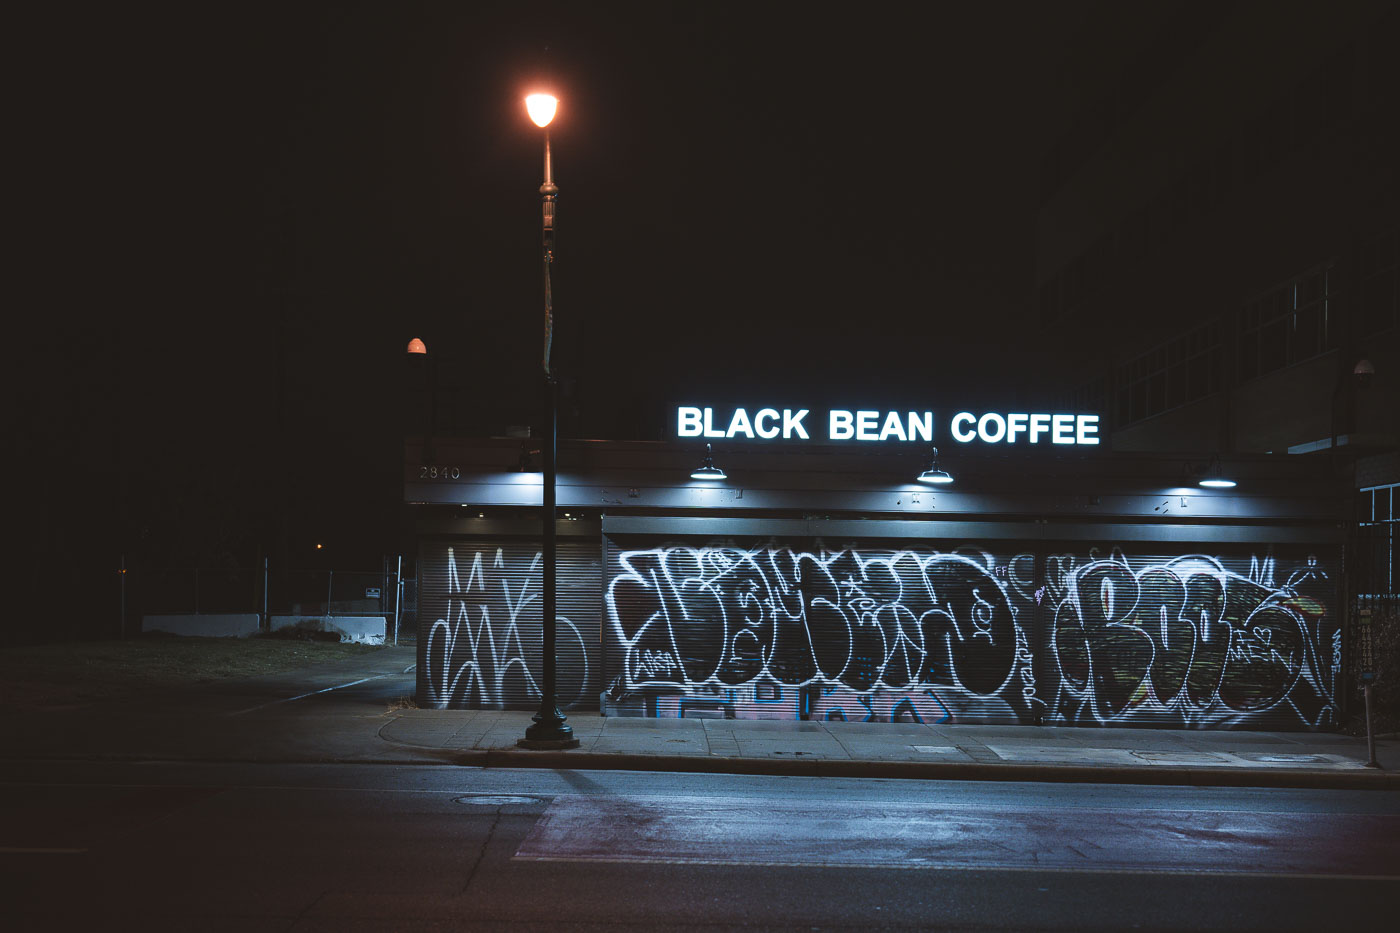 Black Bean Coffee at night with graffiti